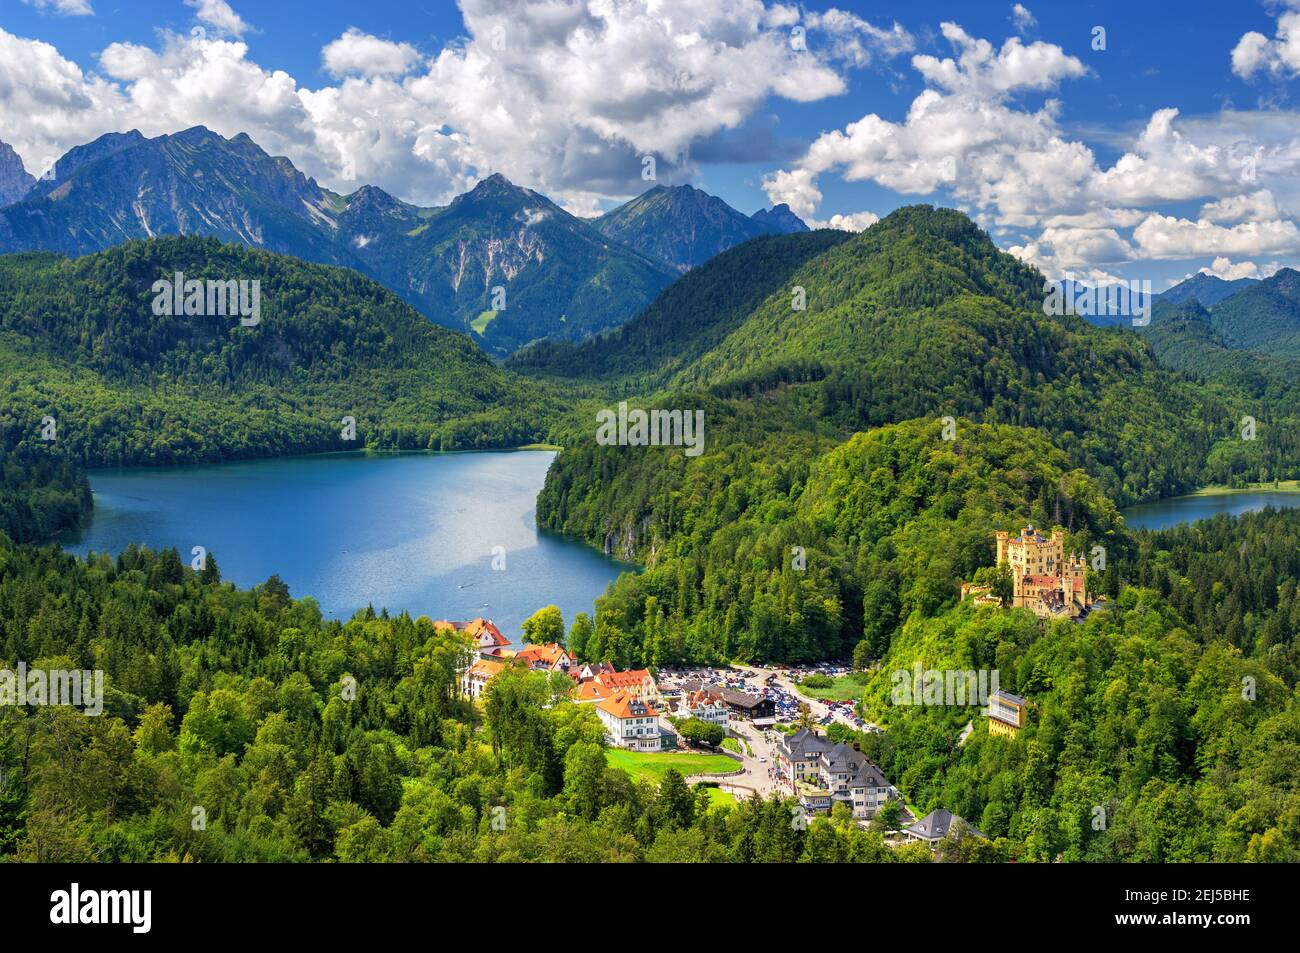 Alpsee lago paisaje Baviera Alemania Foto de stock